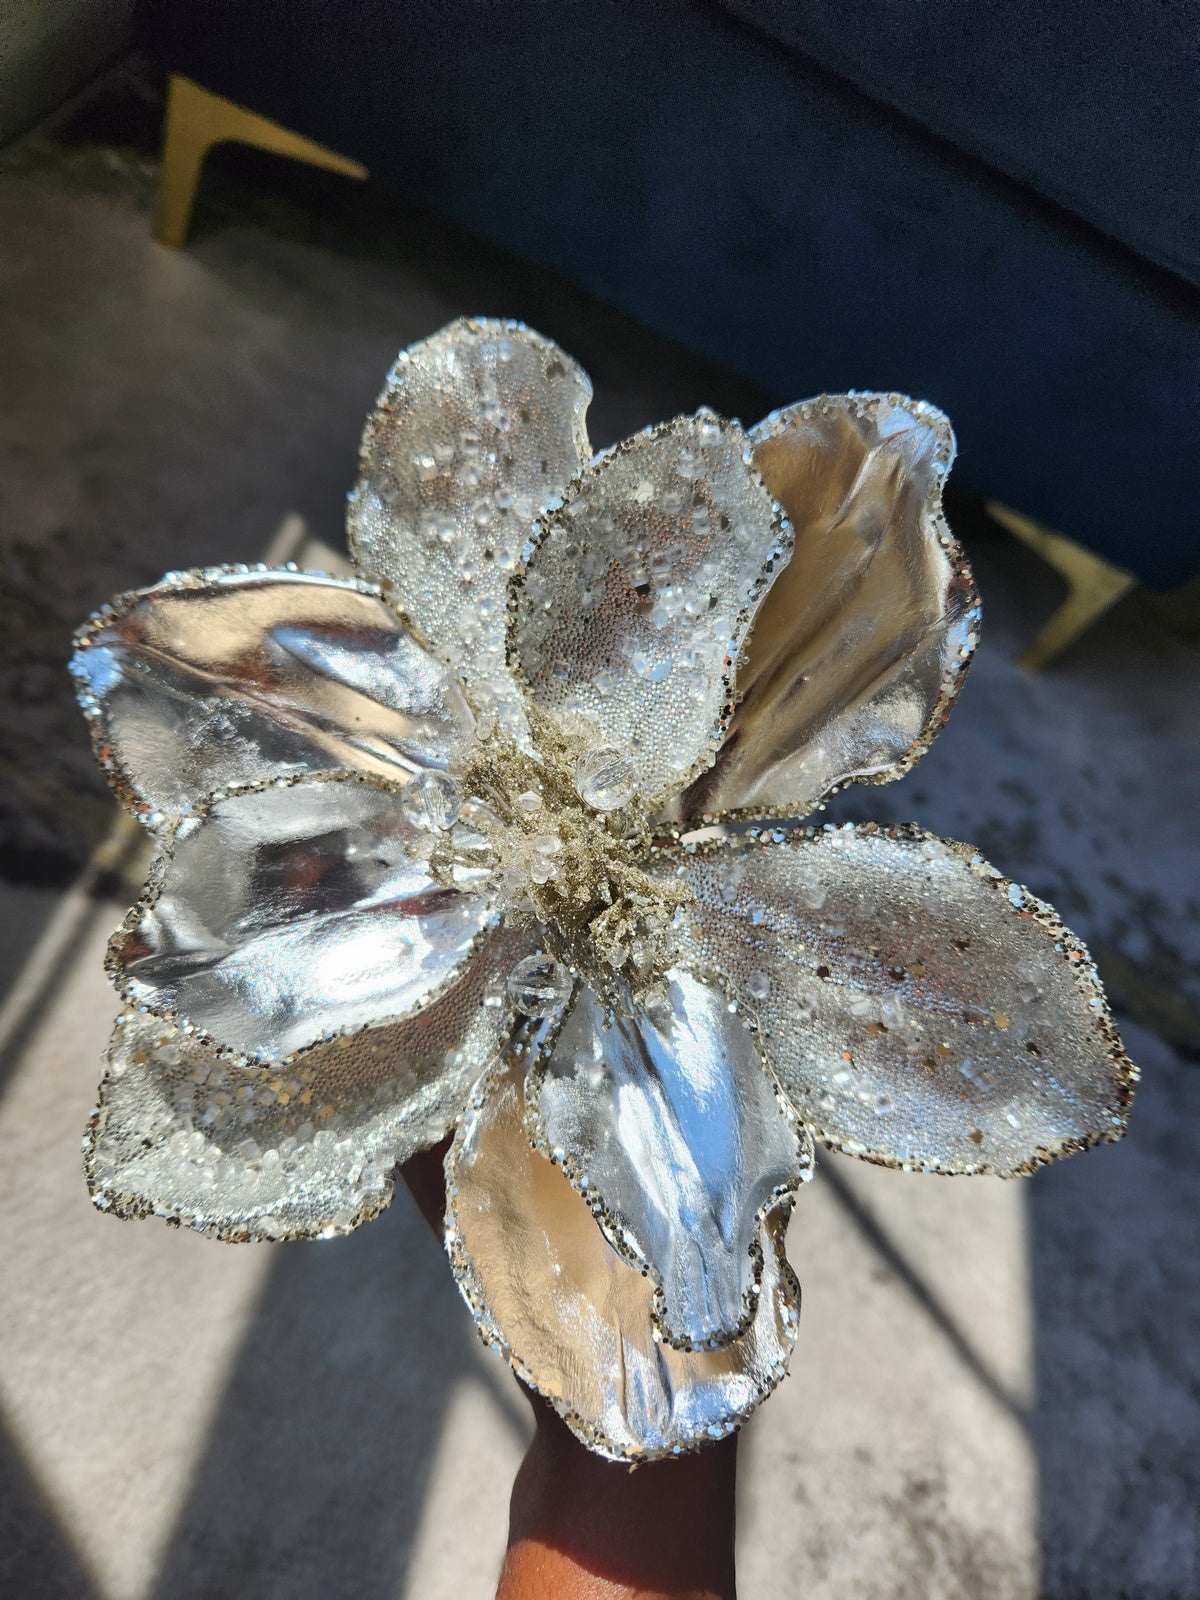 Metallic Beaded & Glittered Magnolia Stem